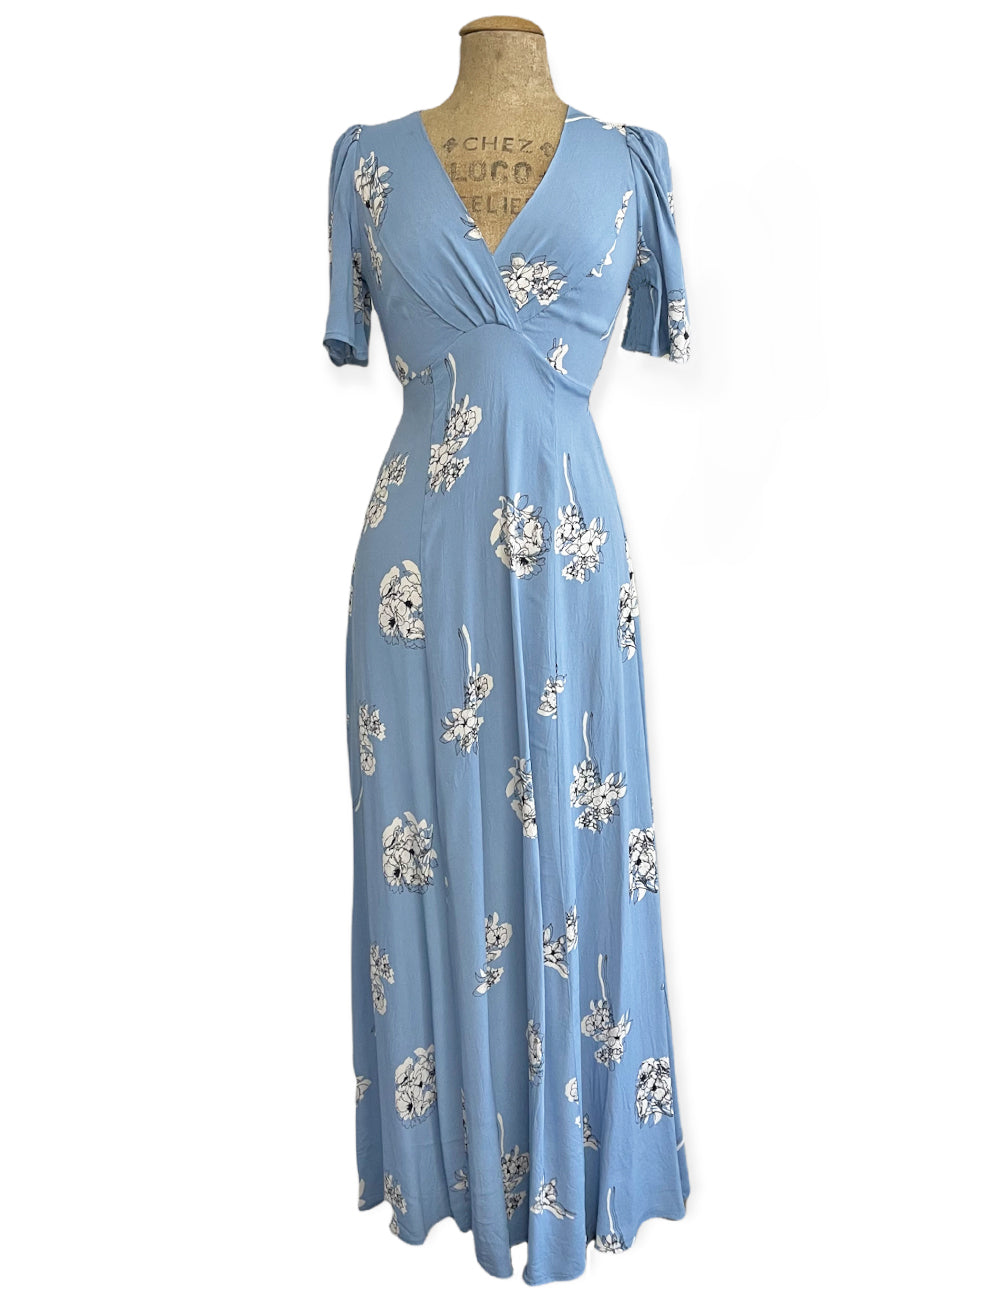 Blue Stencil Floral Vintage Style Maxi Length Rita Dress